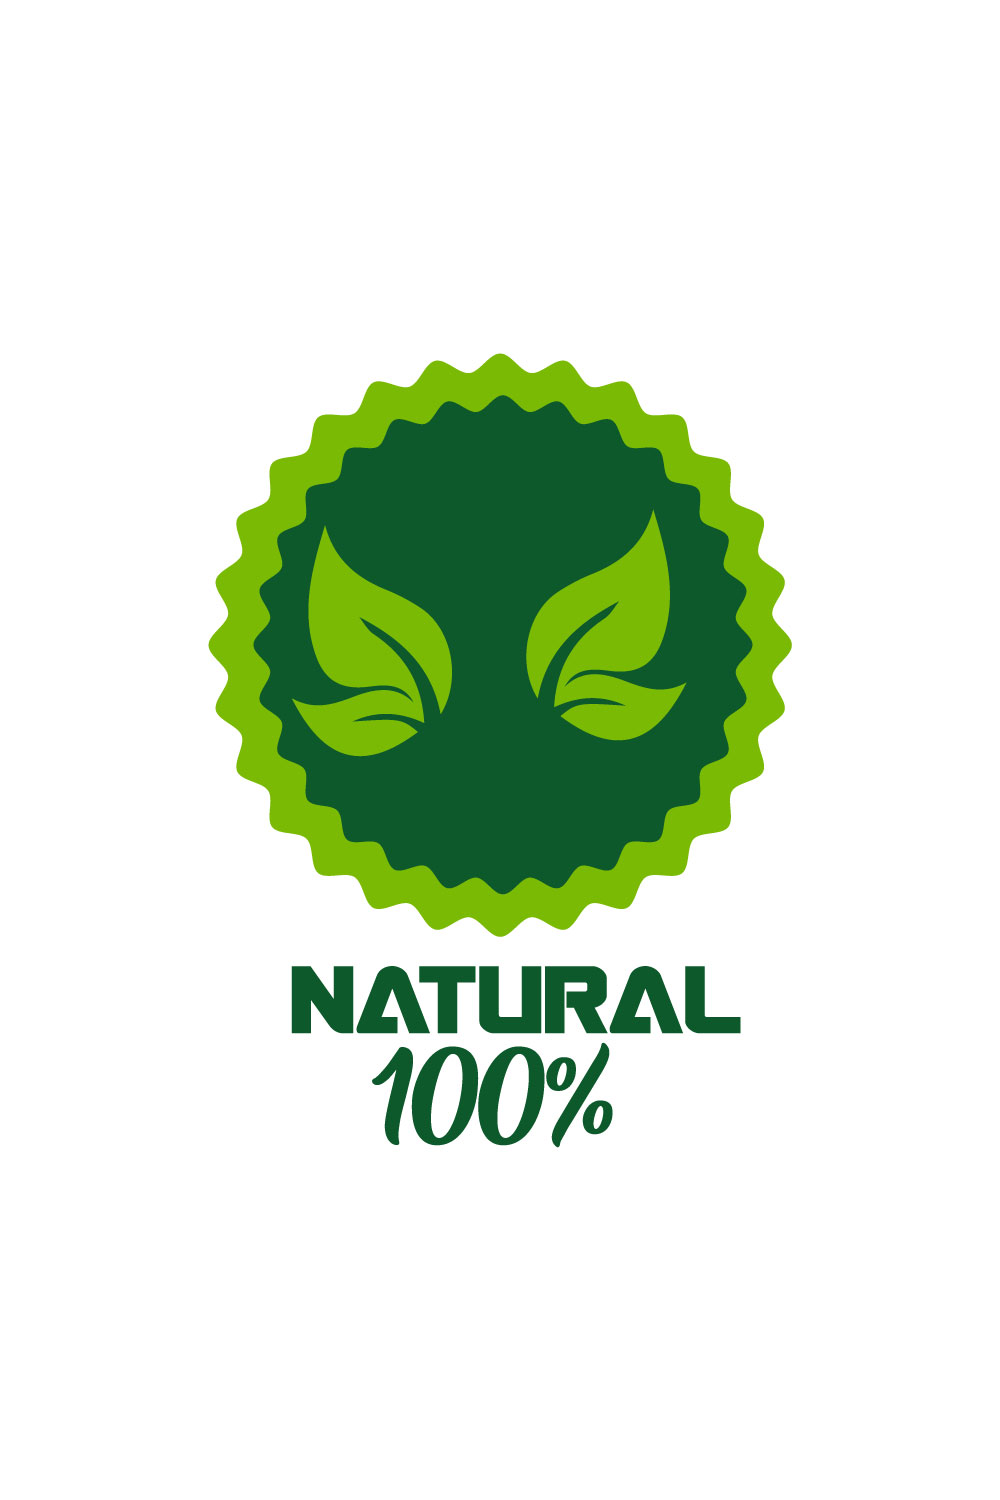 Free herbal herbs logo pinterest preview image.